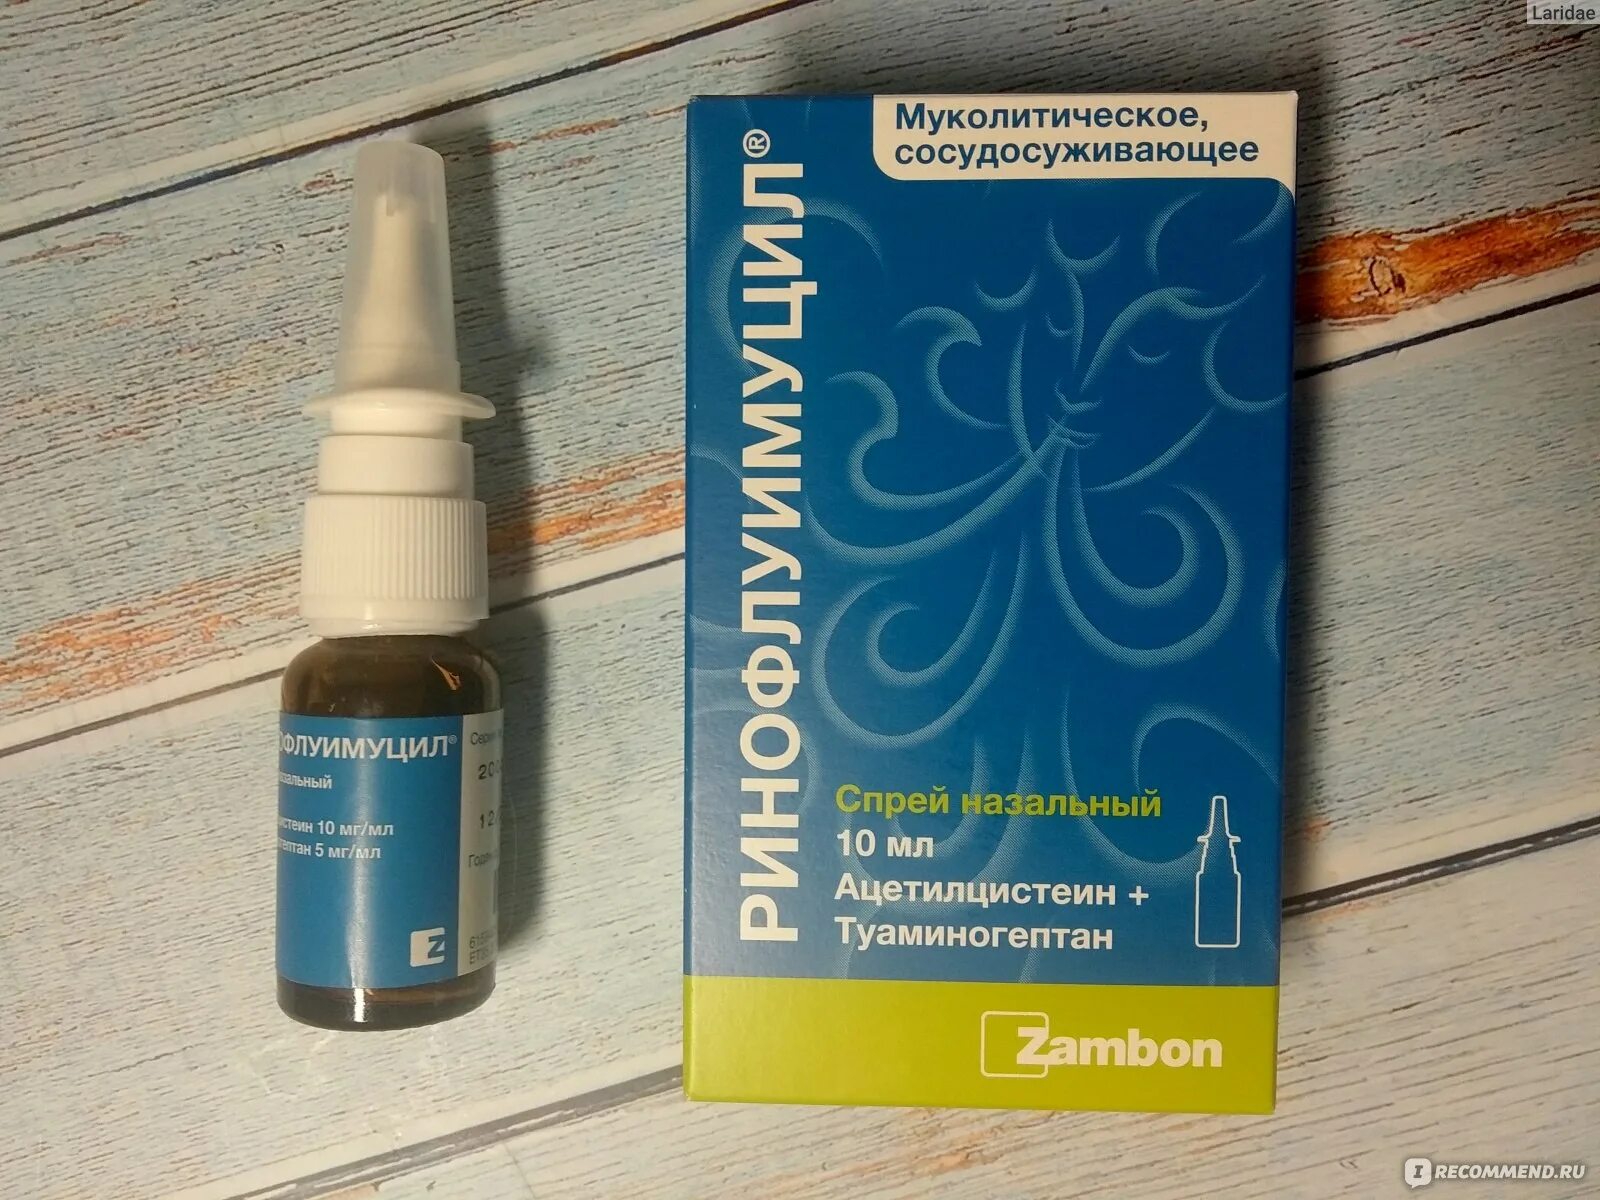 Spray назальный Ринофлуимуцил. Ринофлуимуцил спрей назальный 10мл(ацетилцистеин+туаминогептан). Капли назальные Ринофлуимуцил. Ринофлуимуцил спрей для носа.